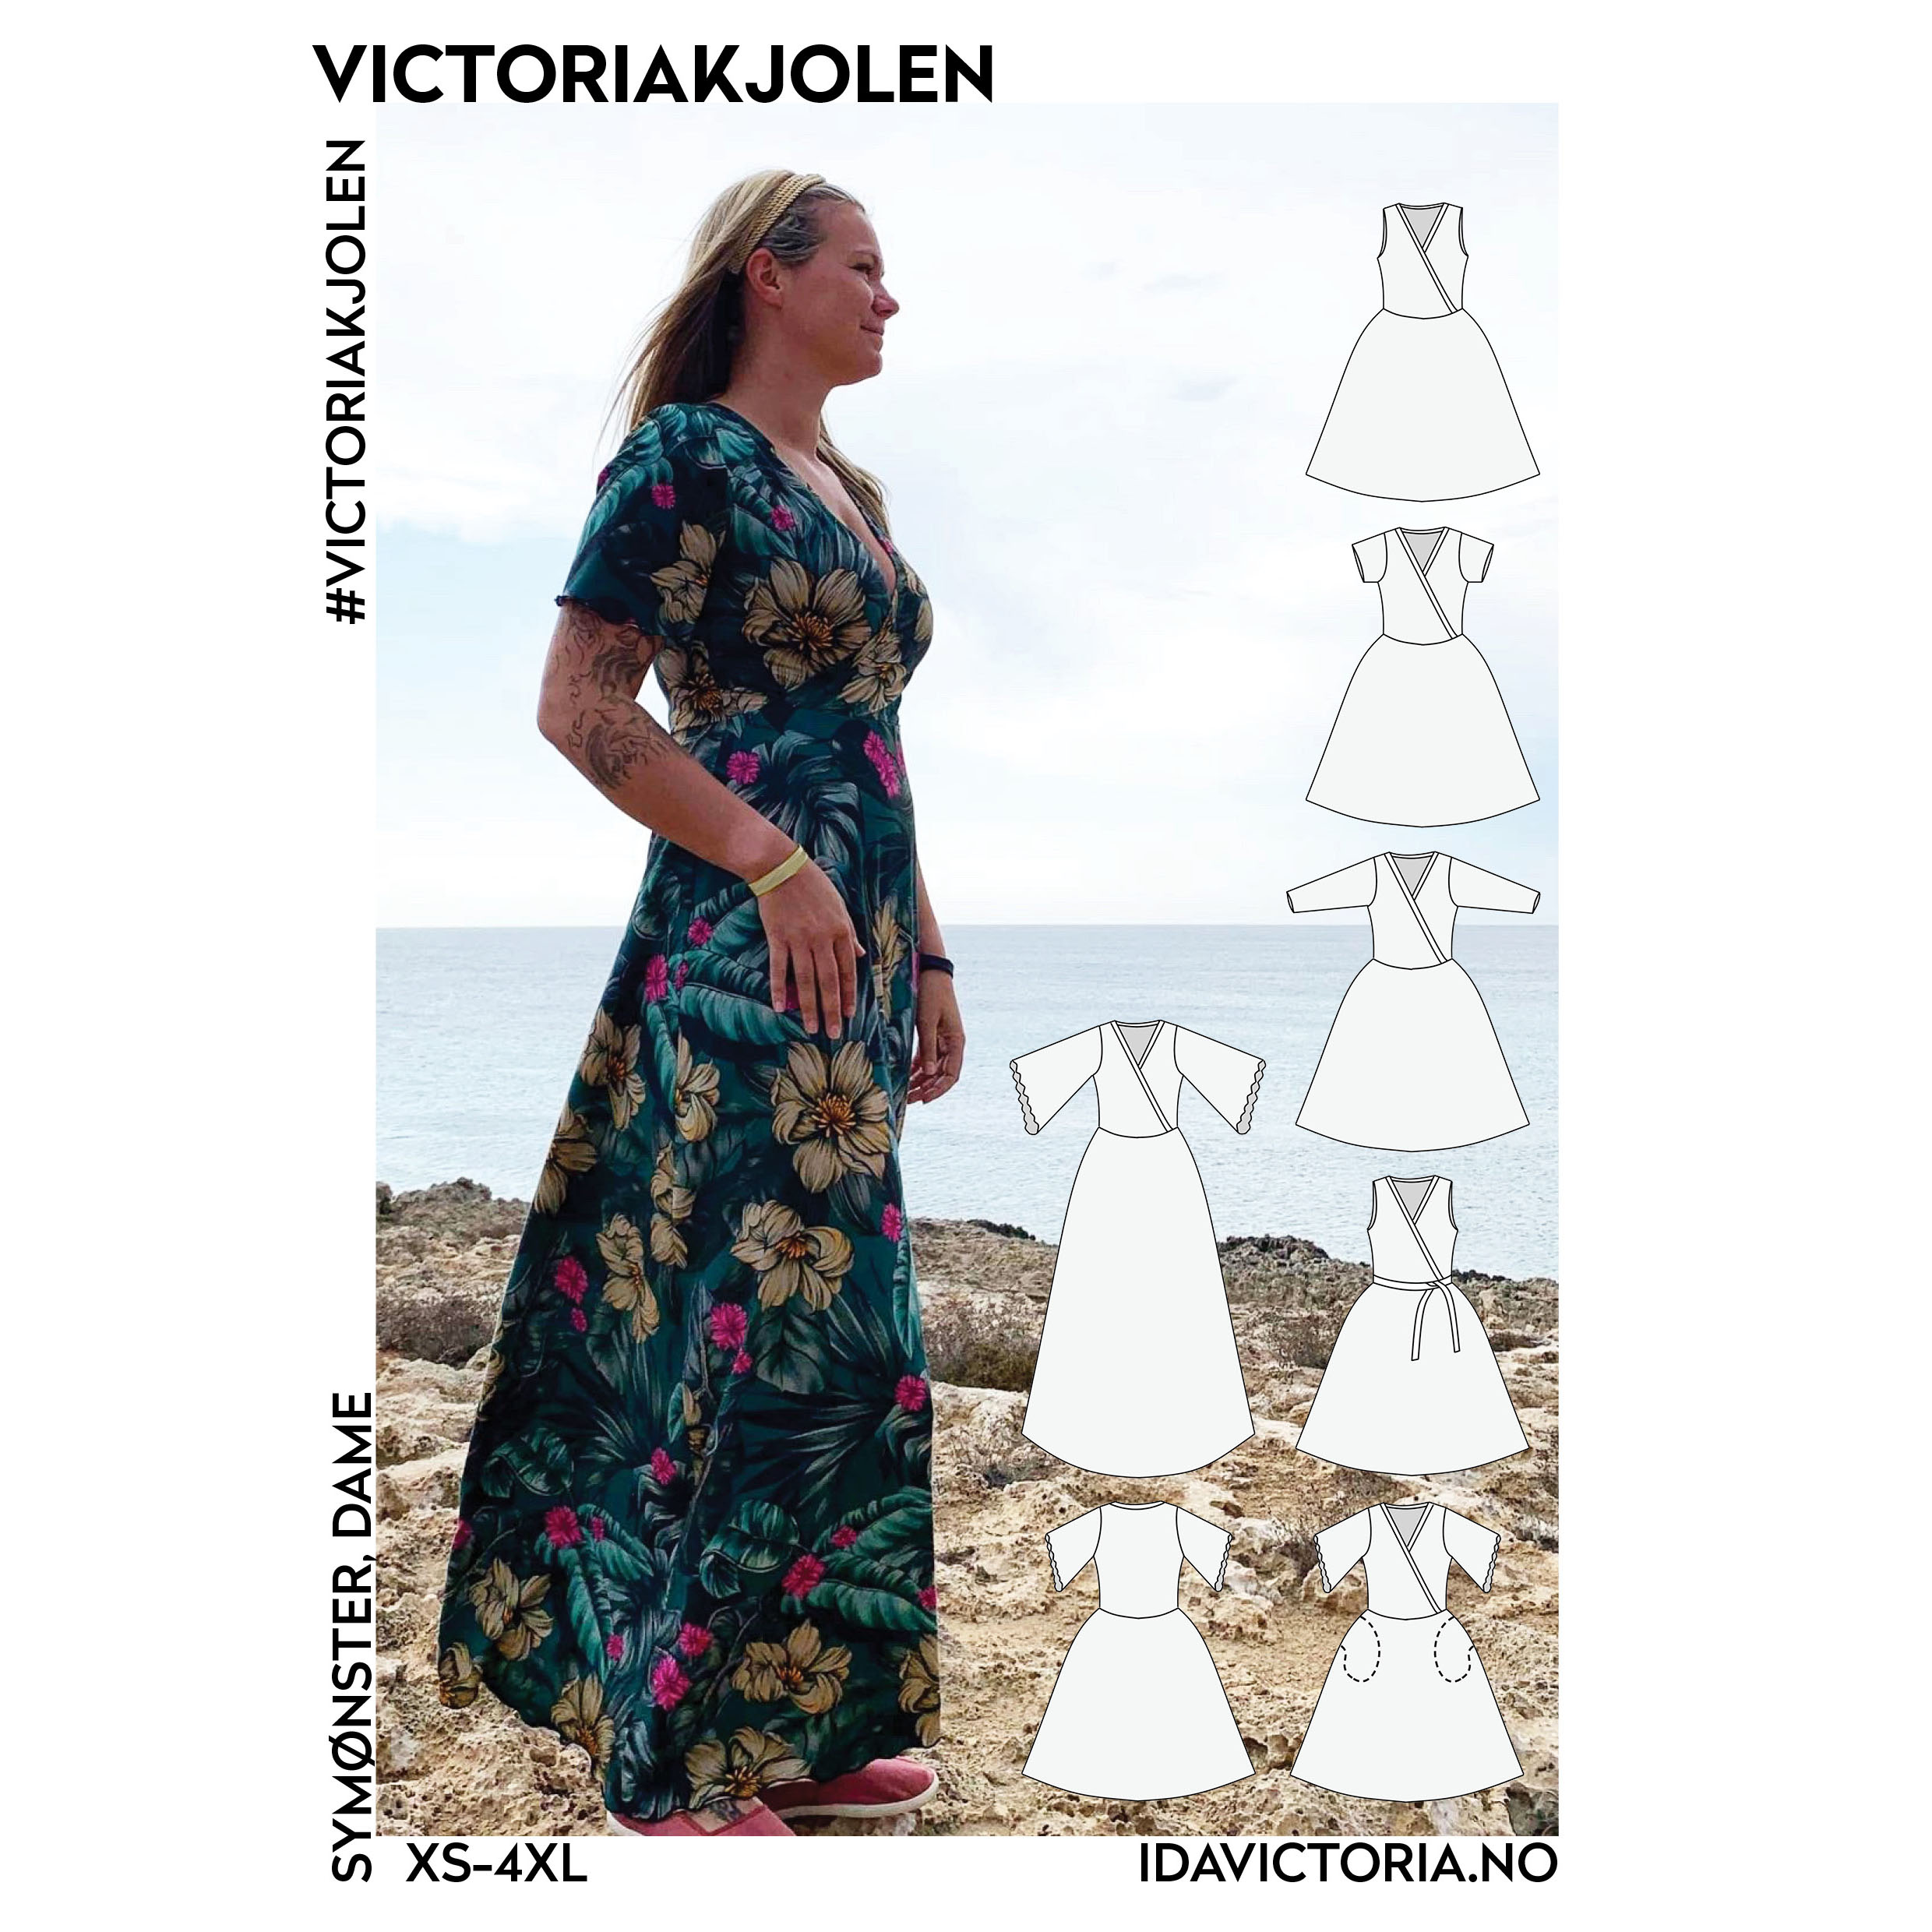 Ida Victoria - Victoriakjolen - RiLa &